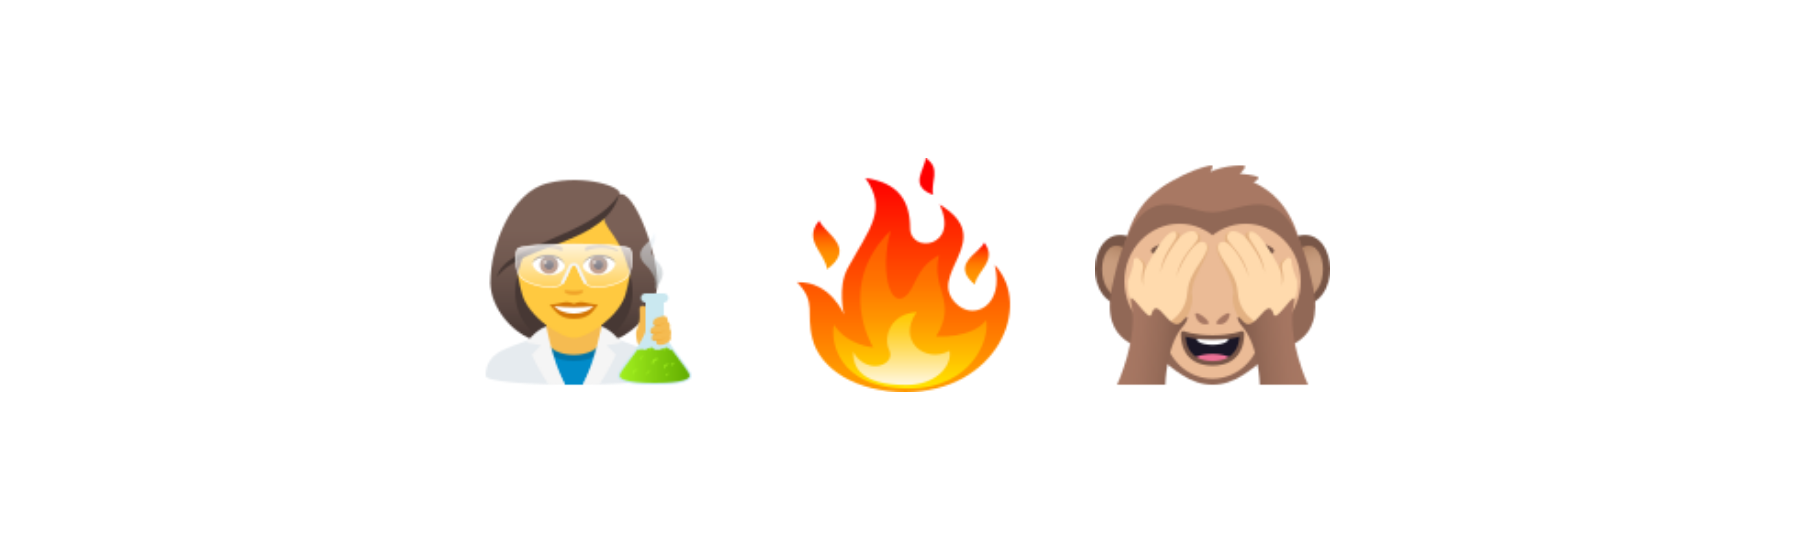 Science emoji